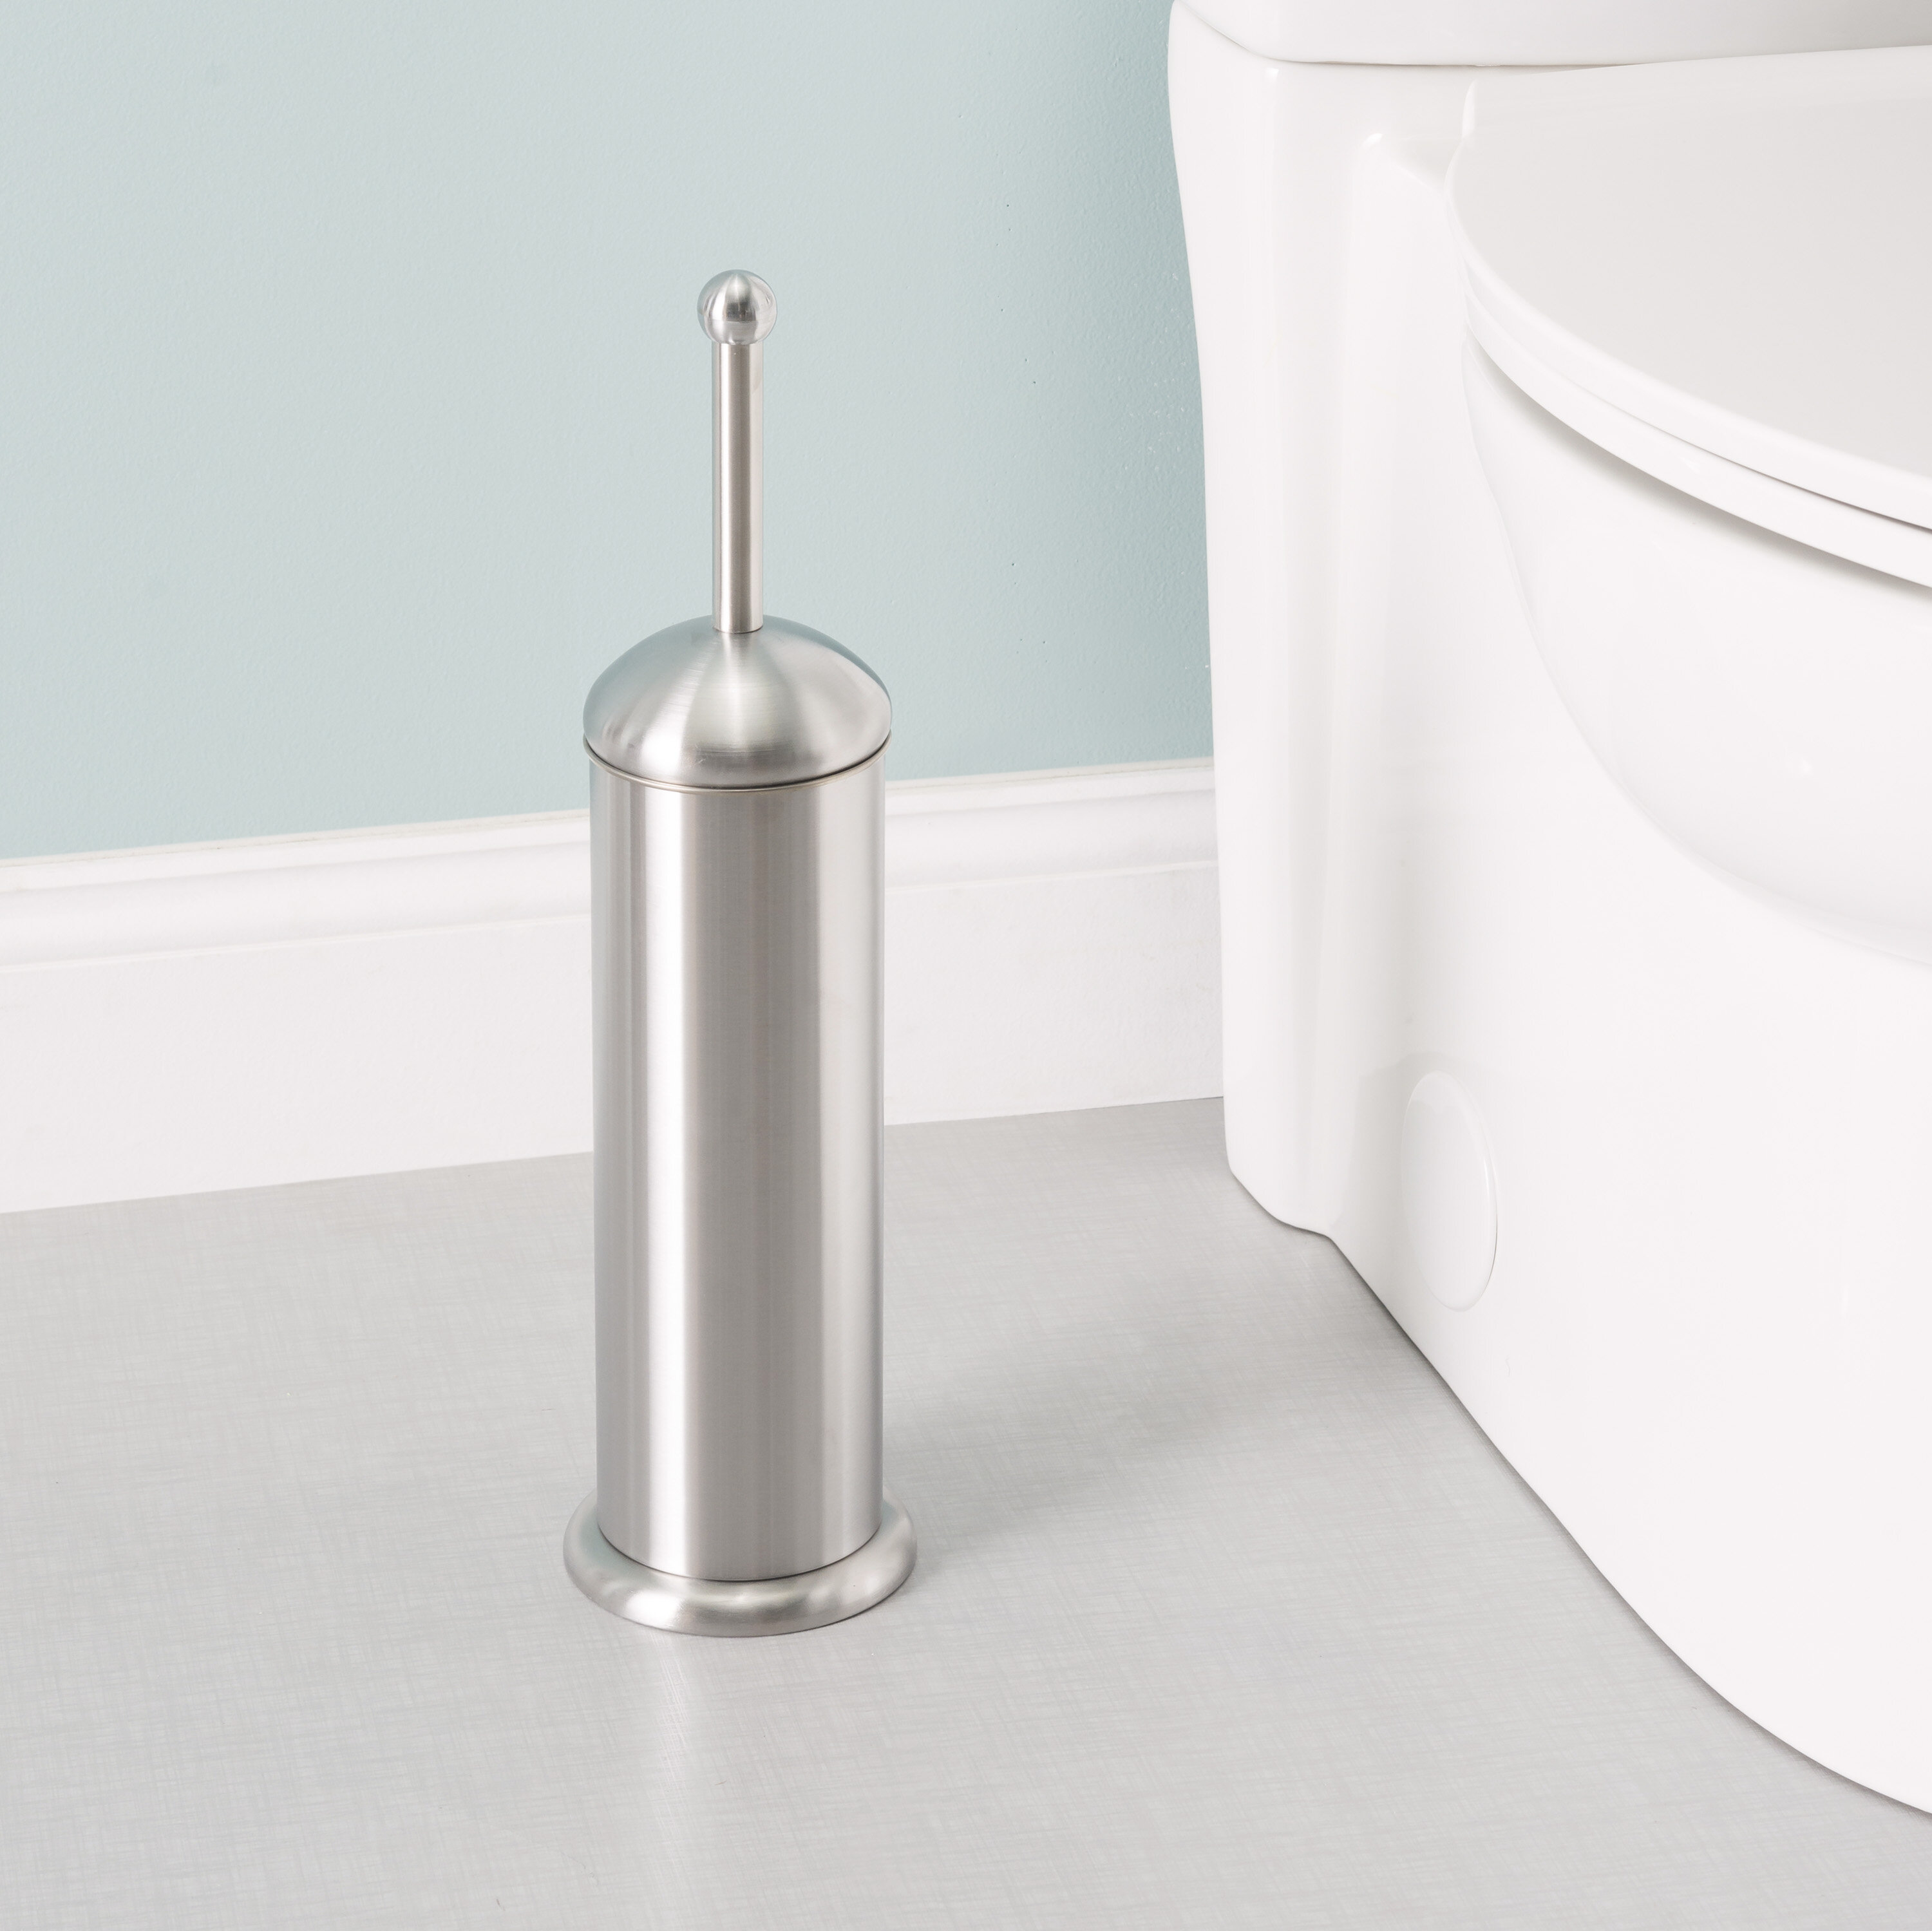 Bathroom Toilet Brush Holder Silver Chrome Wall Mountable Stylish Discreet